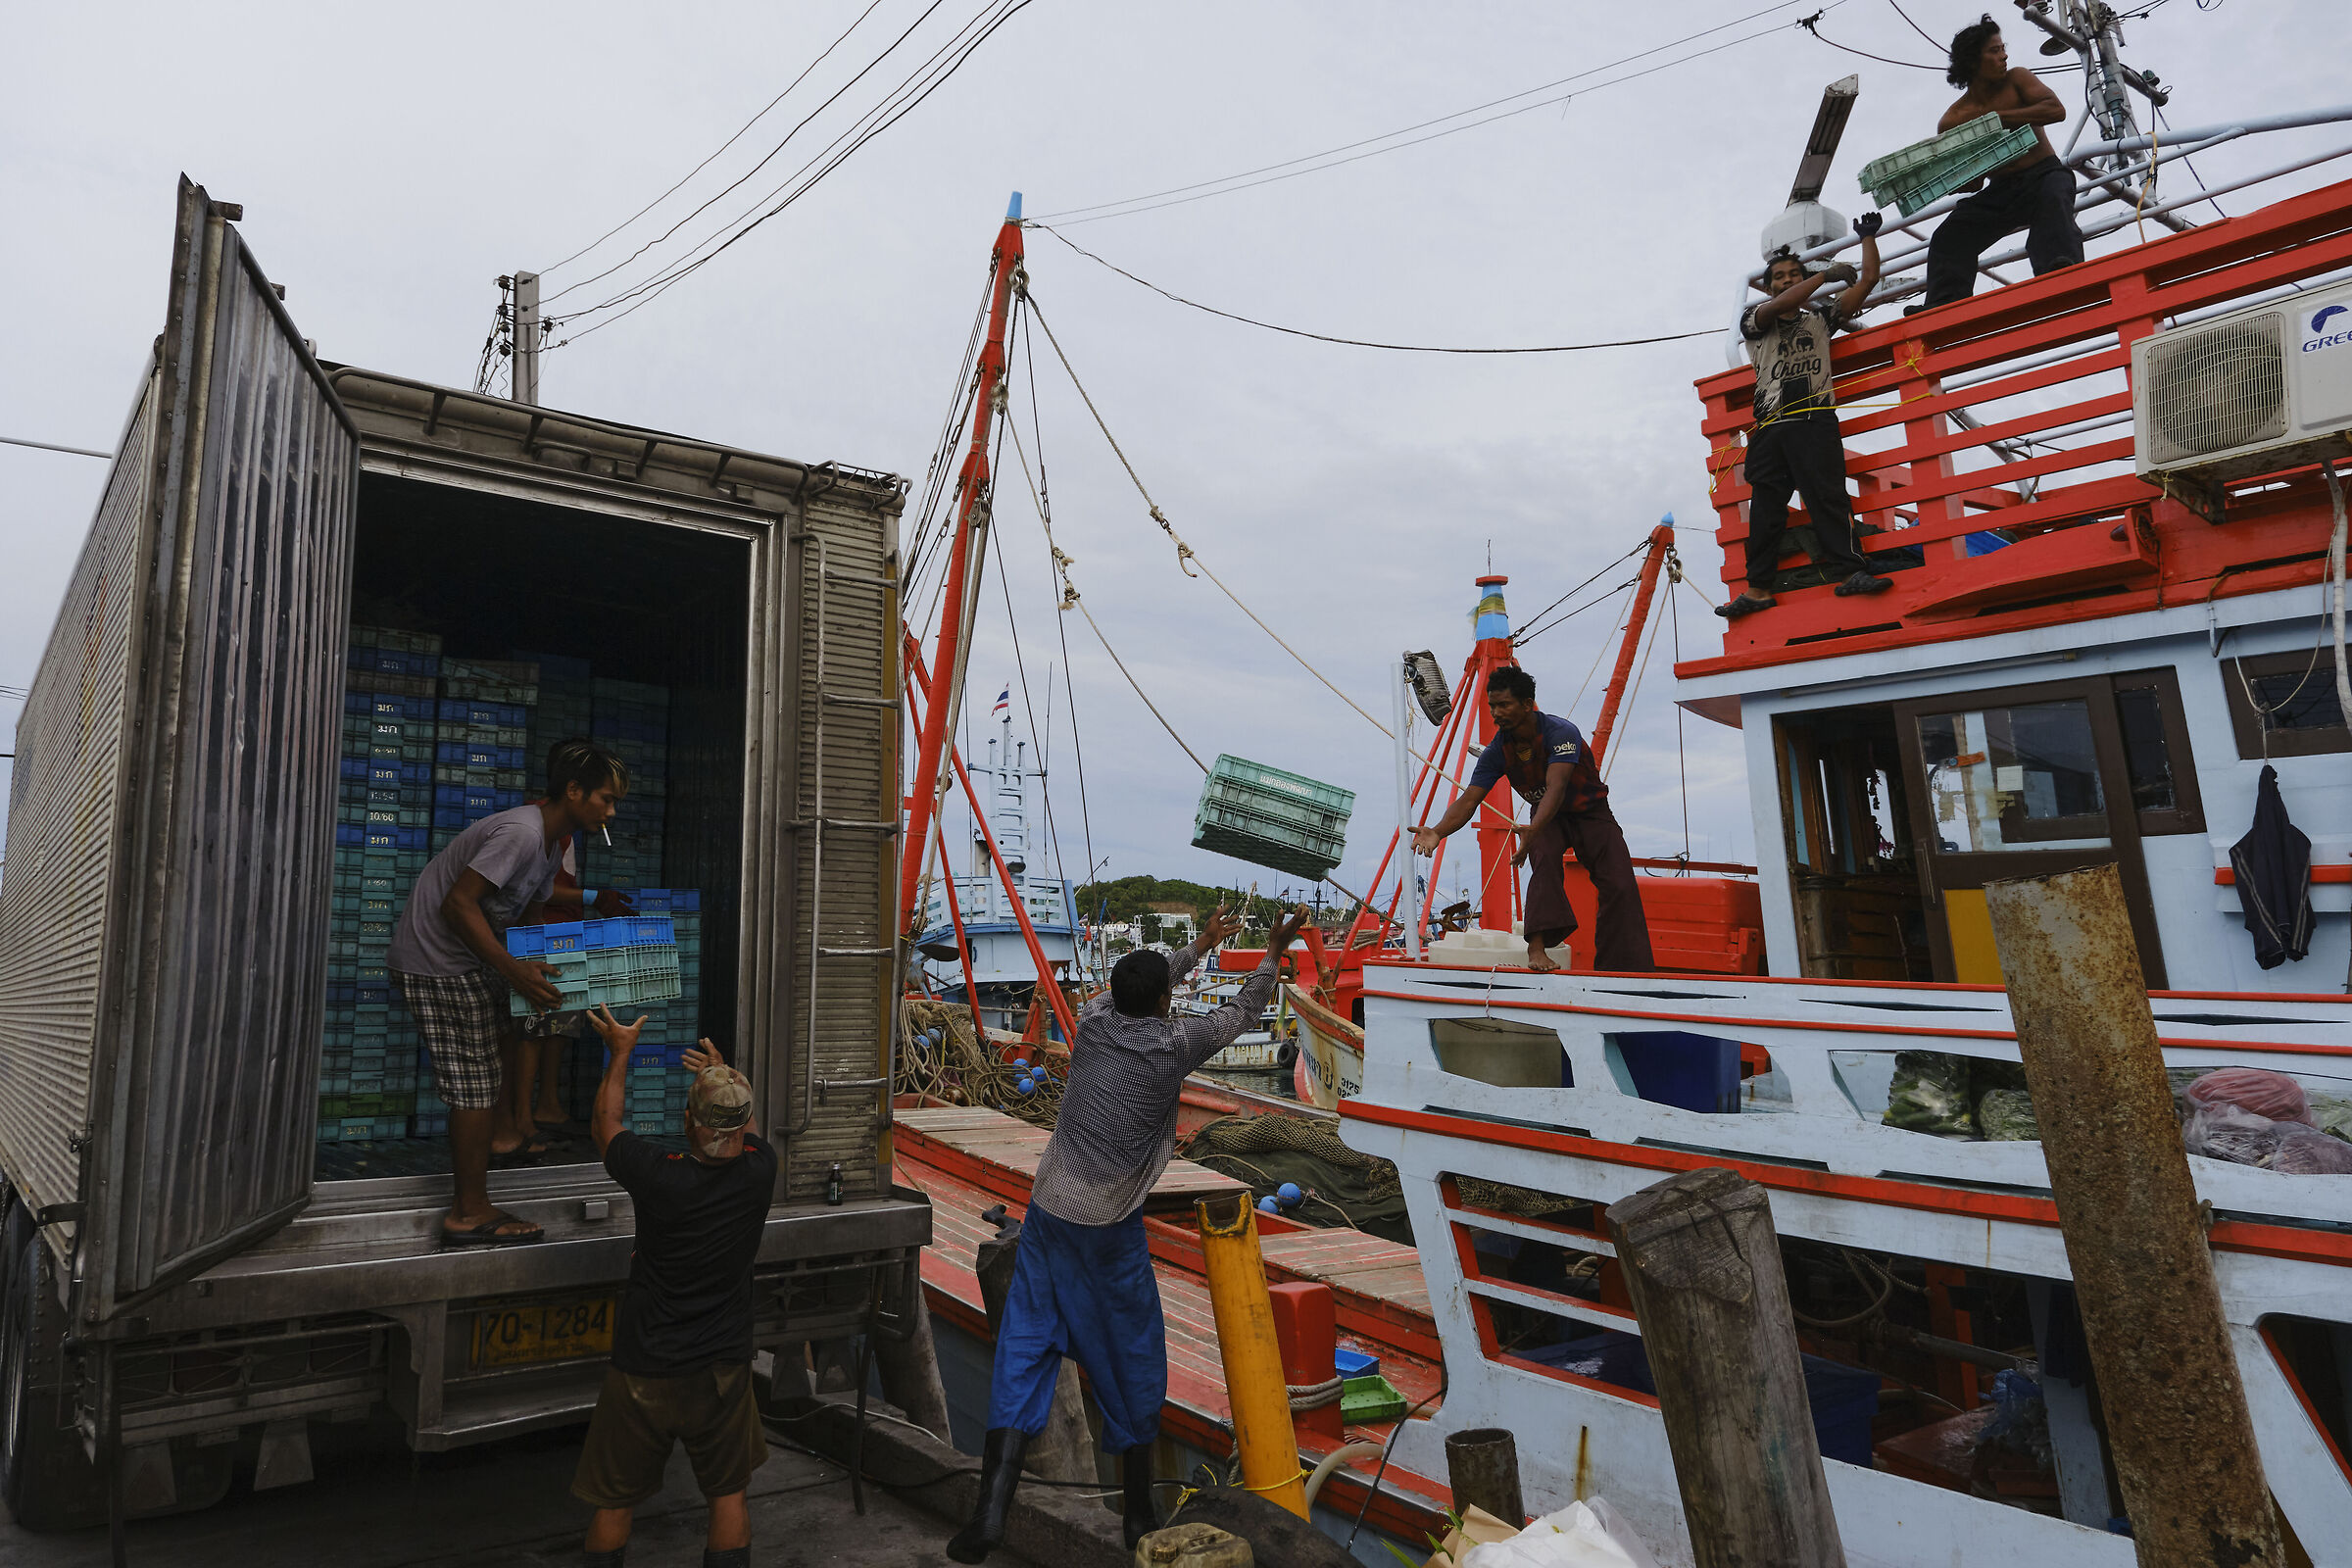 Loading the fishing boat...